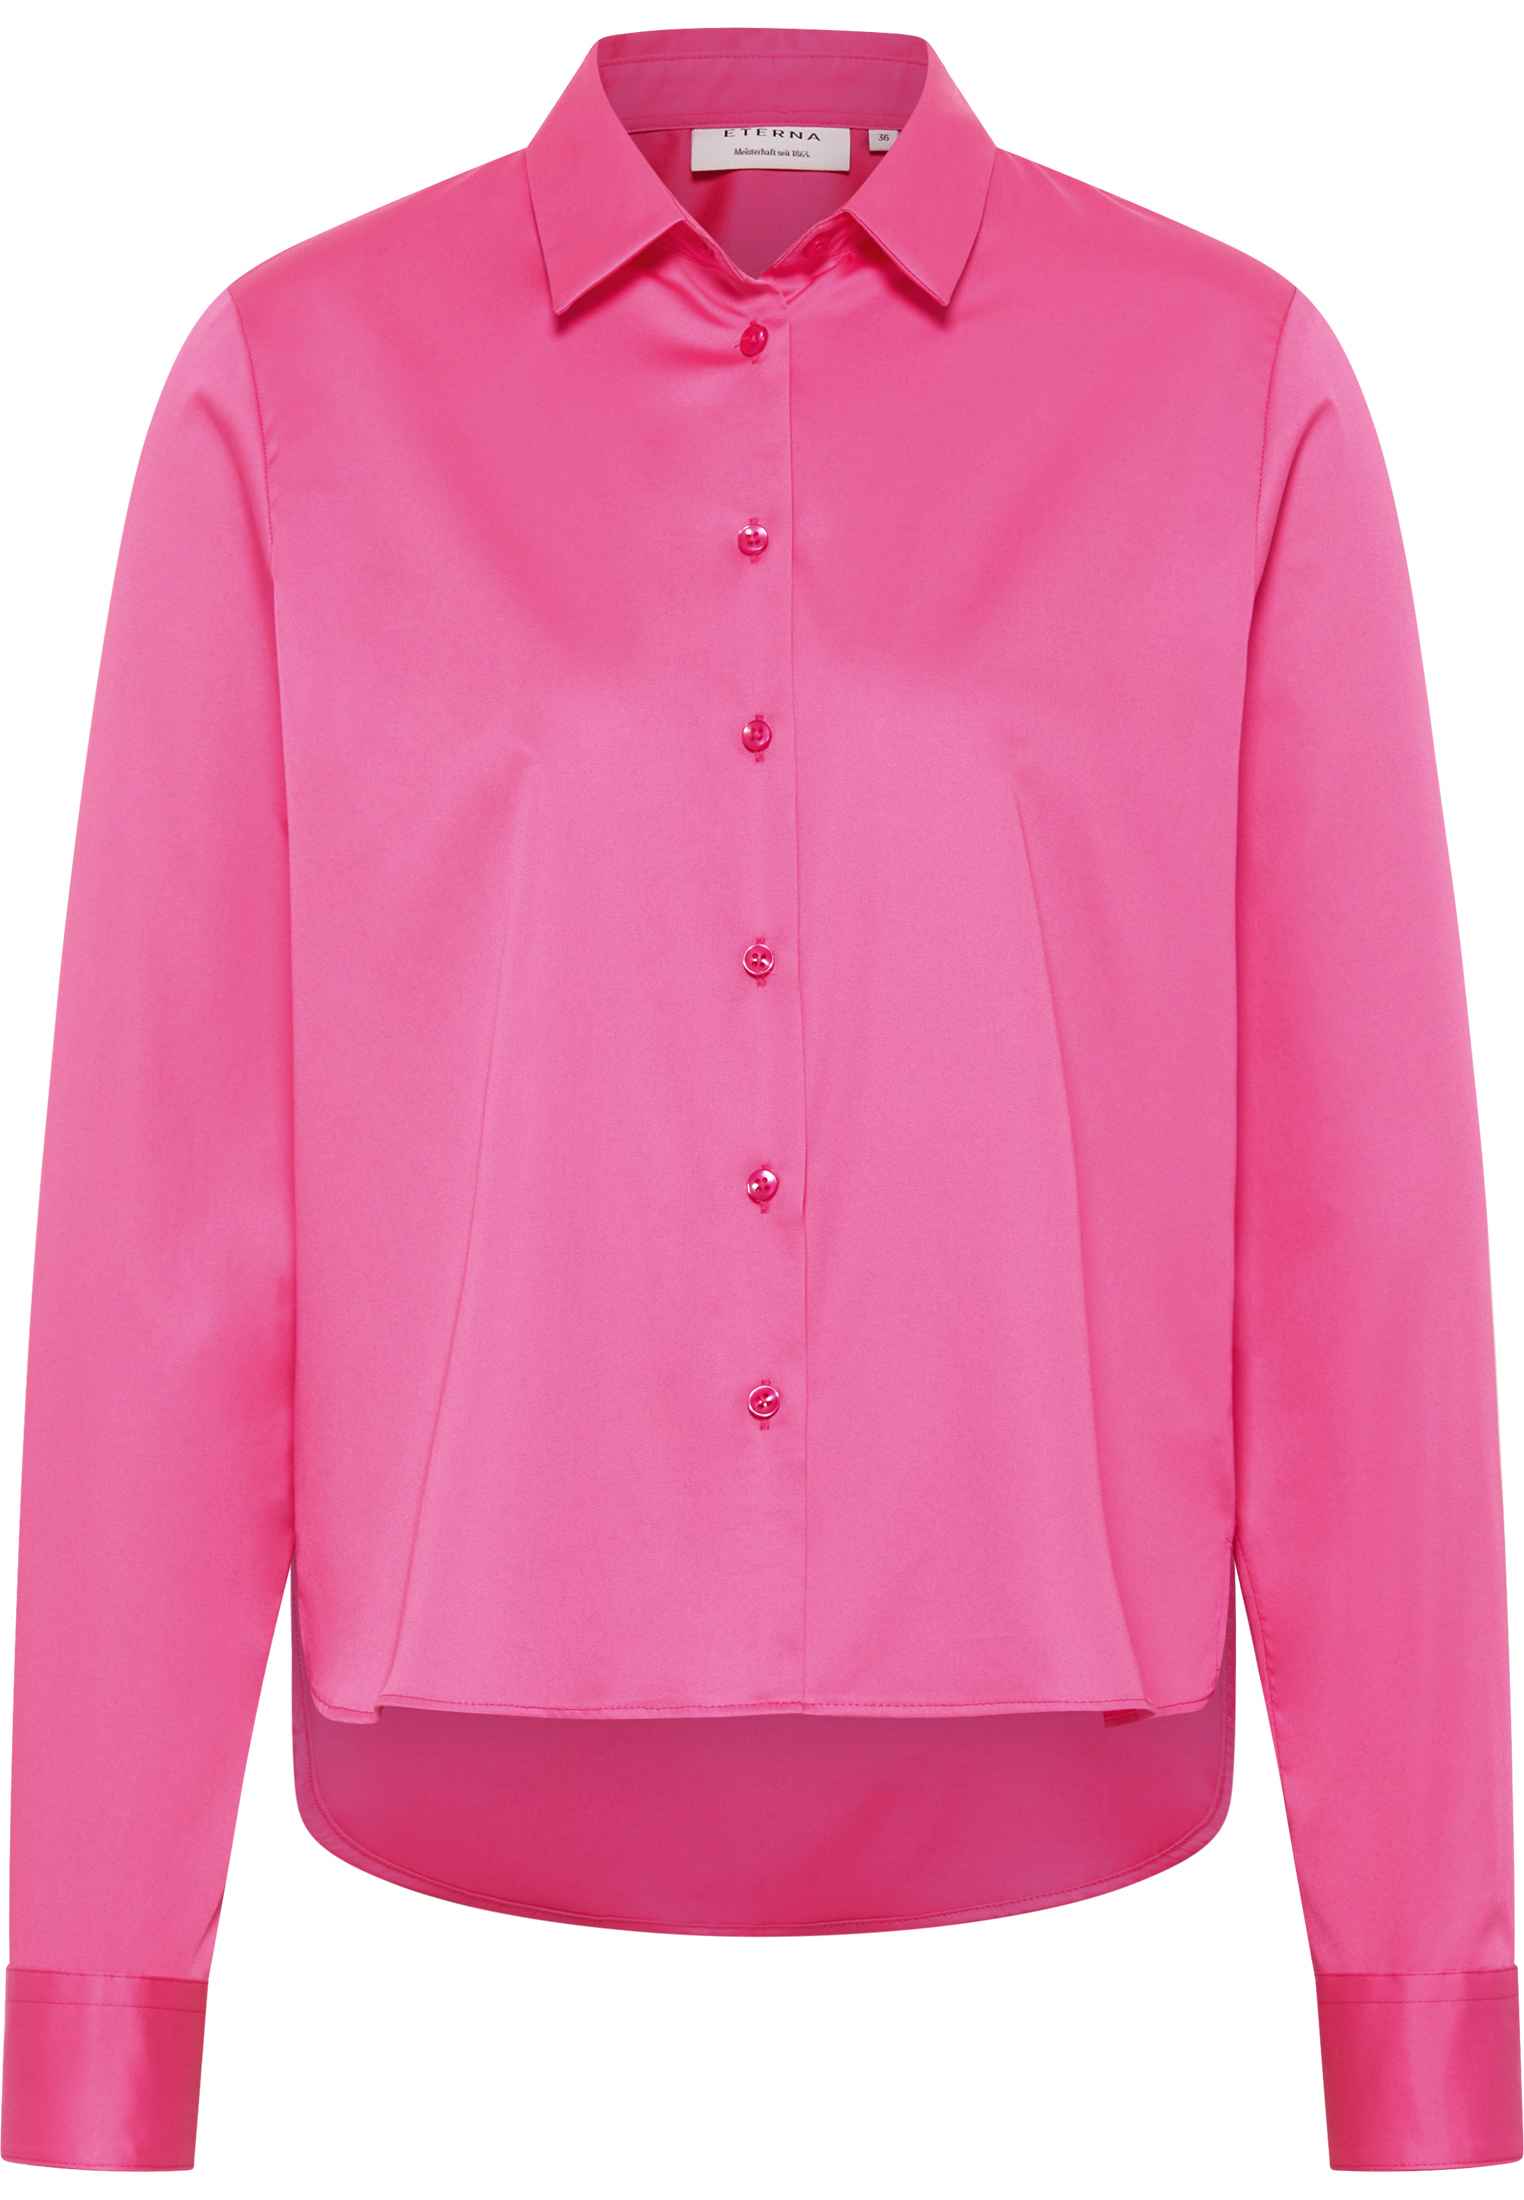 Satin Shirt Blouse in pink plain | pink | 52 | long sleeve |  2BL04469-15-21-52-1/1